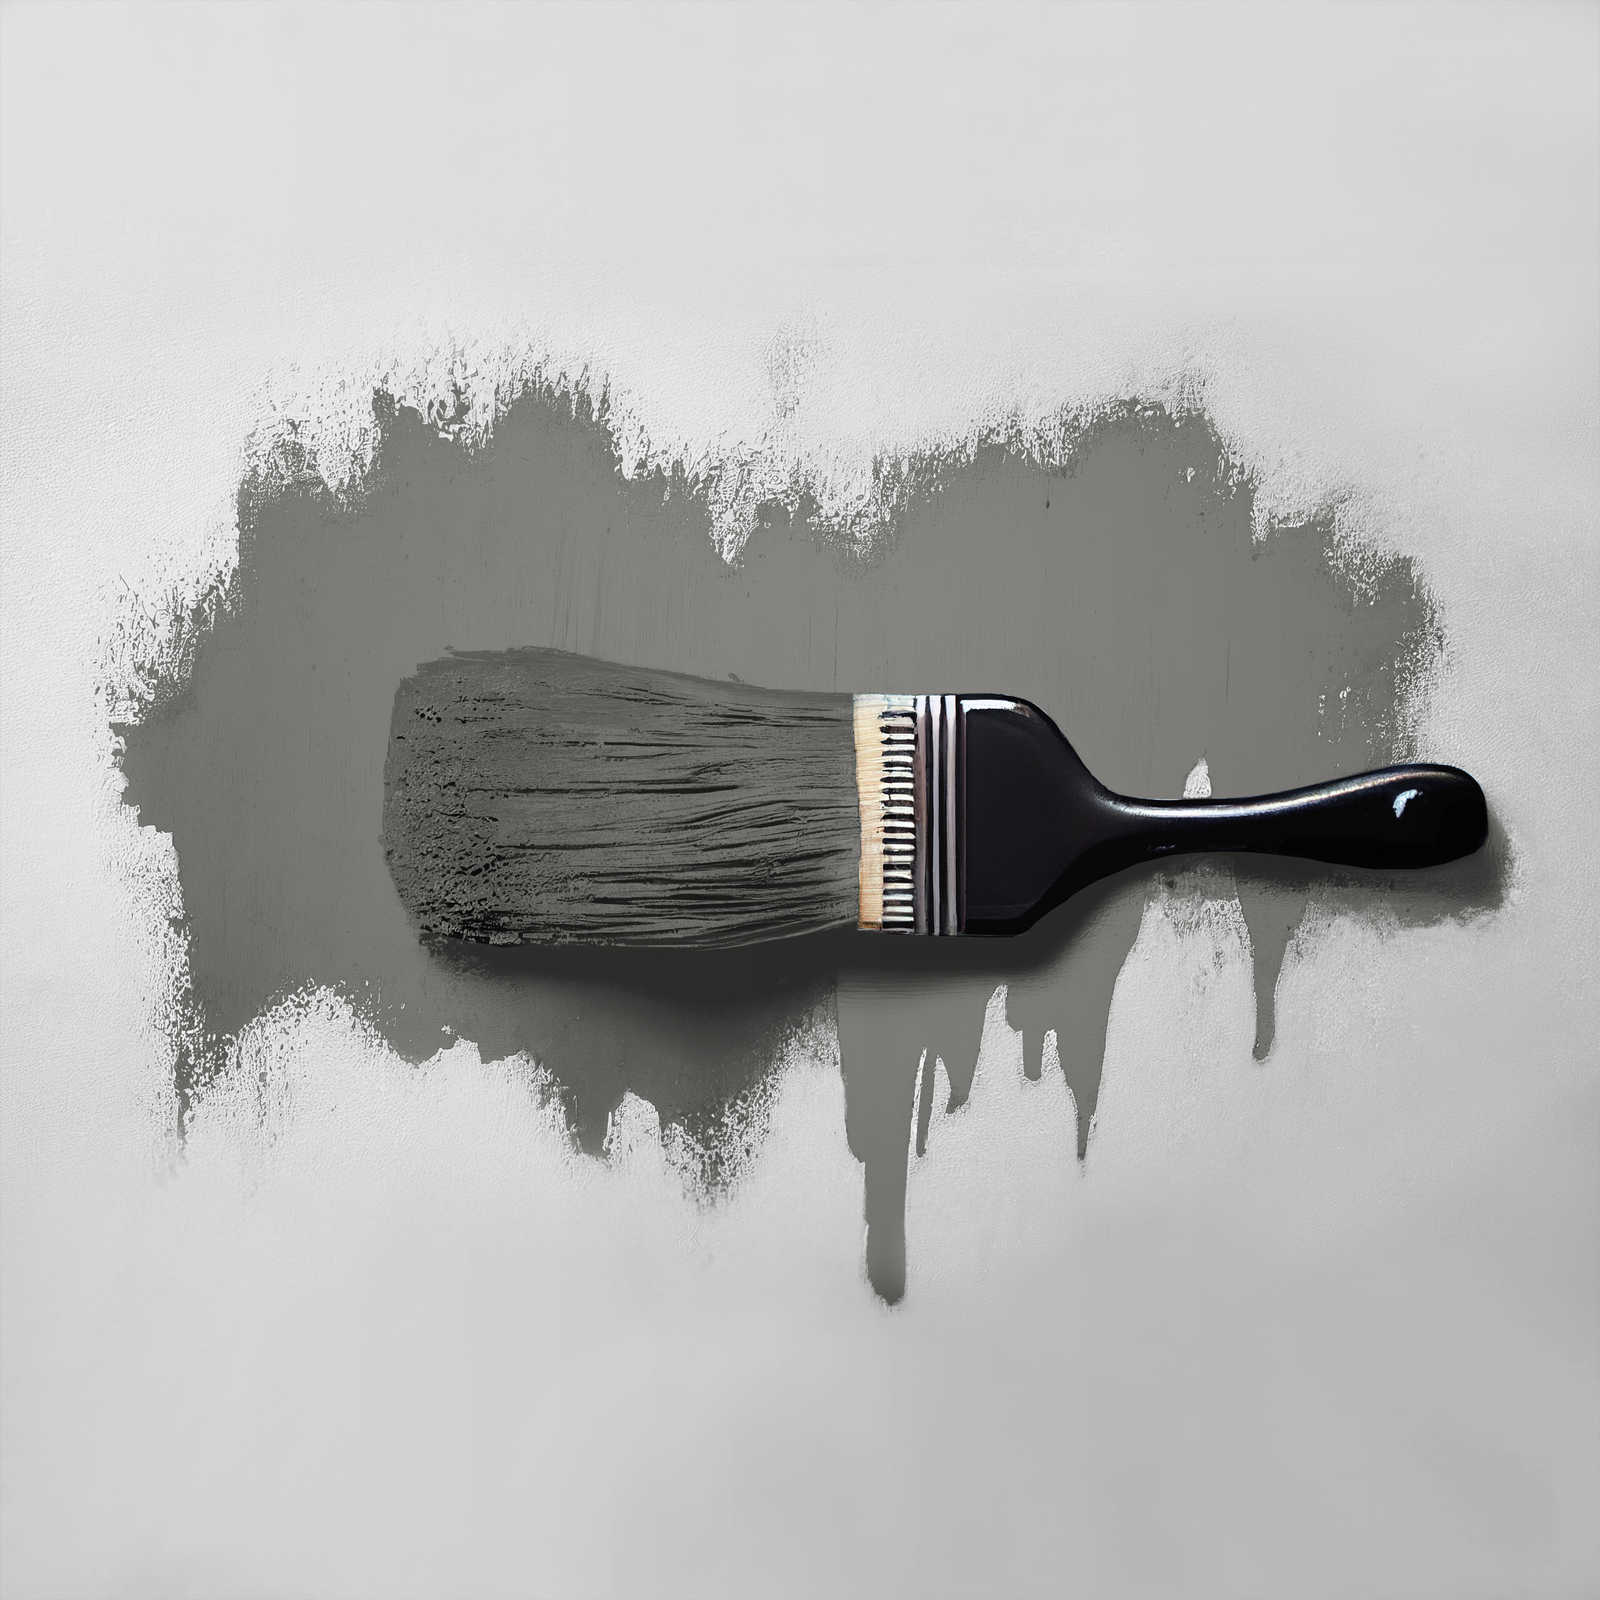             Pintura mural TCK1013 »Poised Pepper« en gris oscuro – 2,5 litro
        